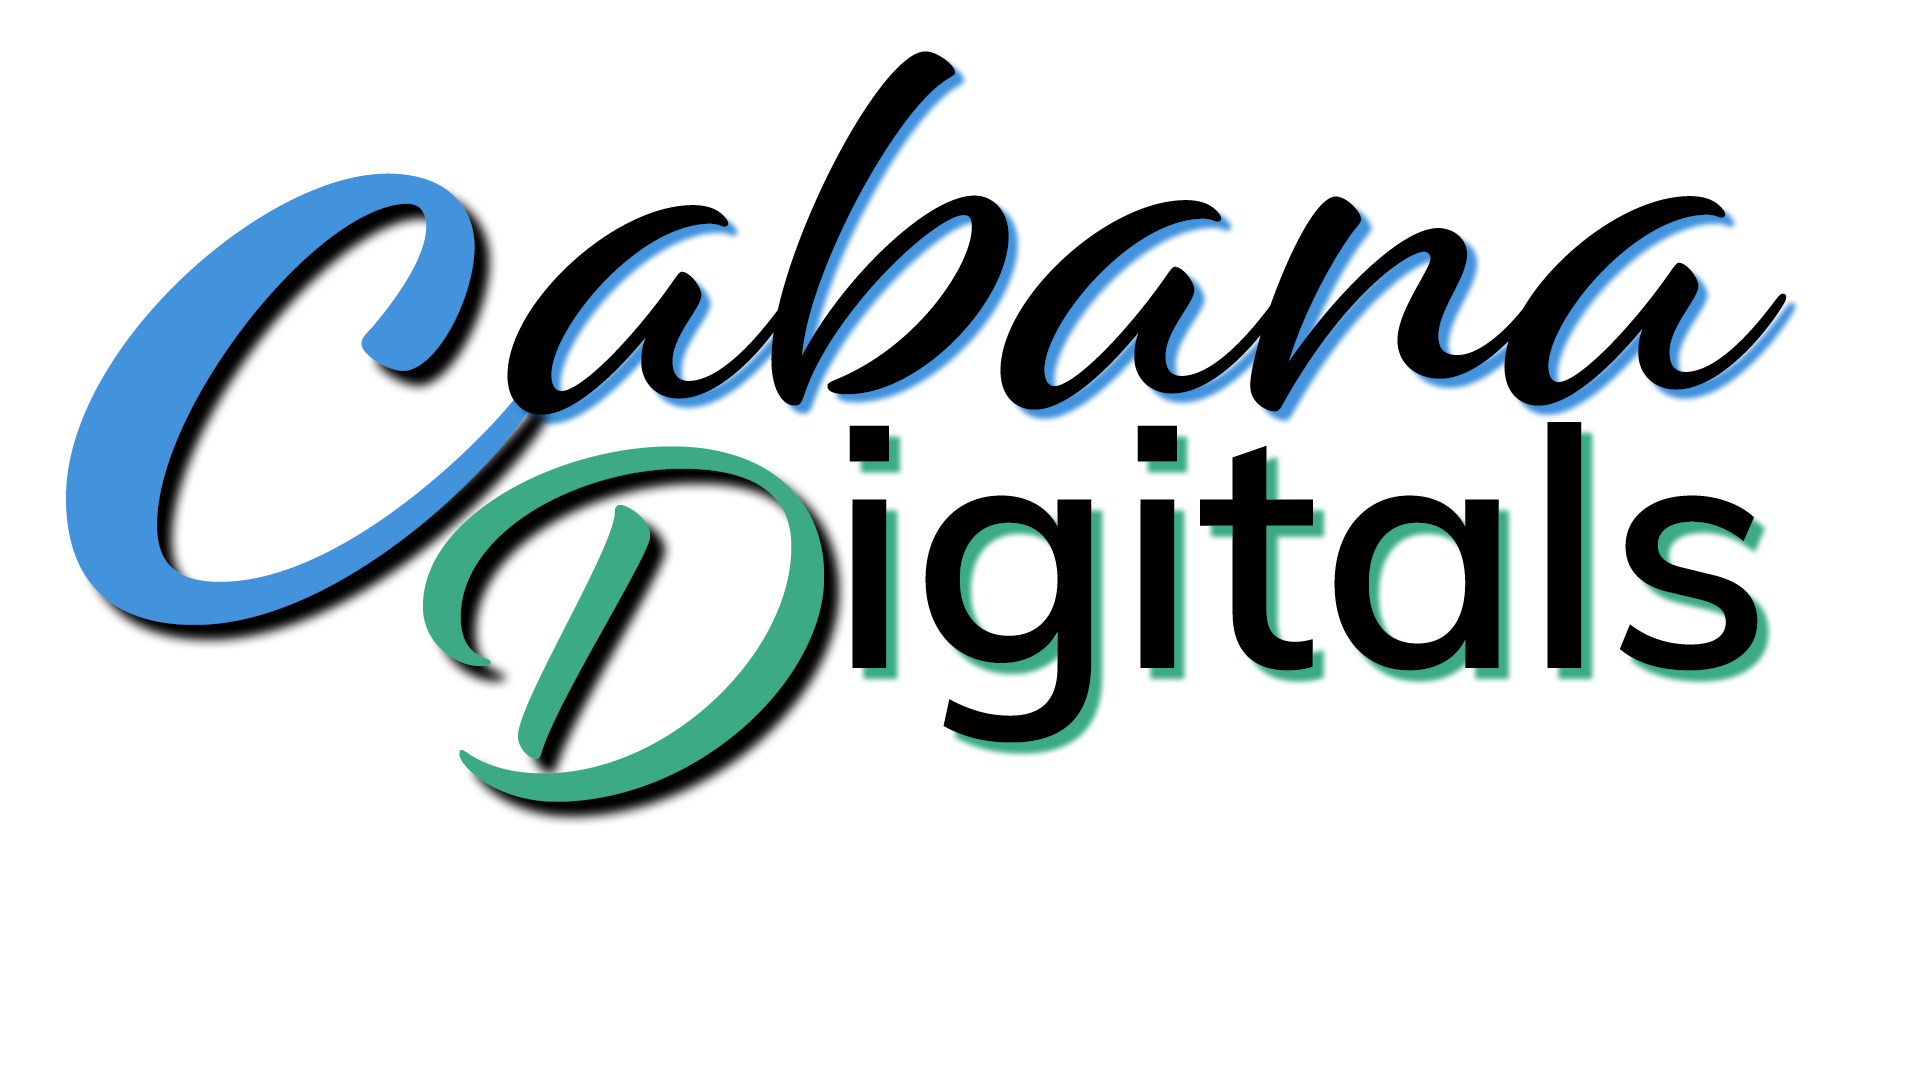 Cabana Digitals Full Service Website Development